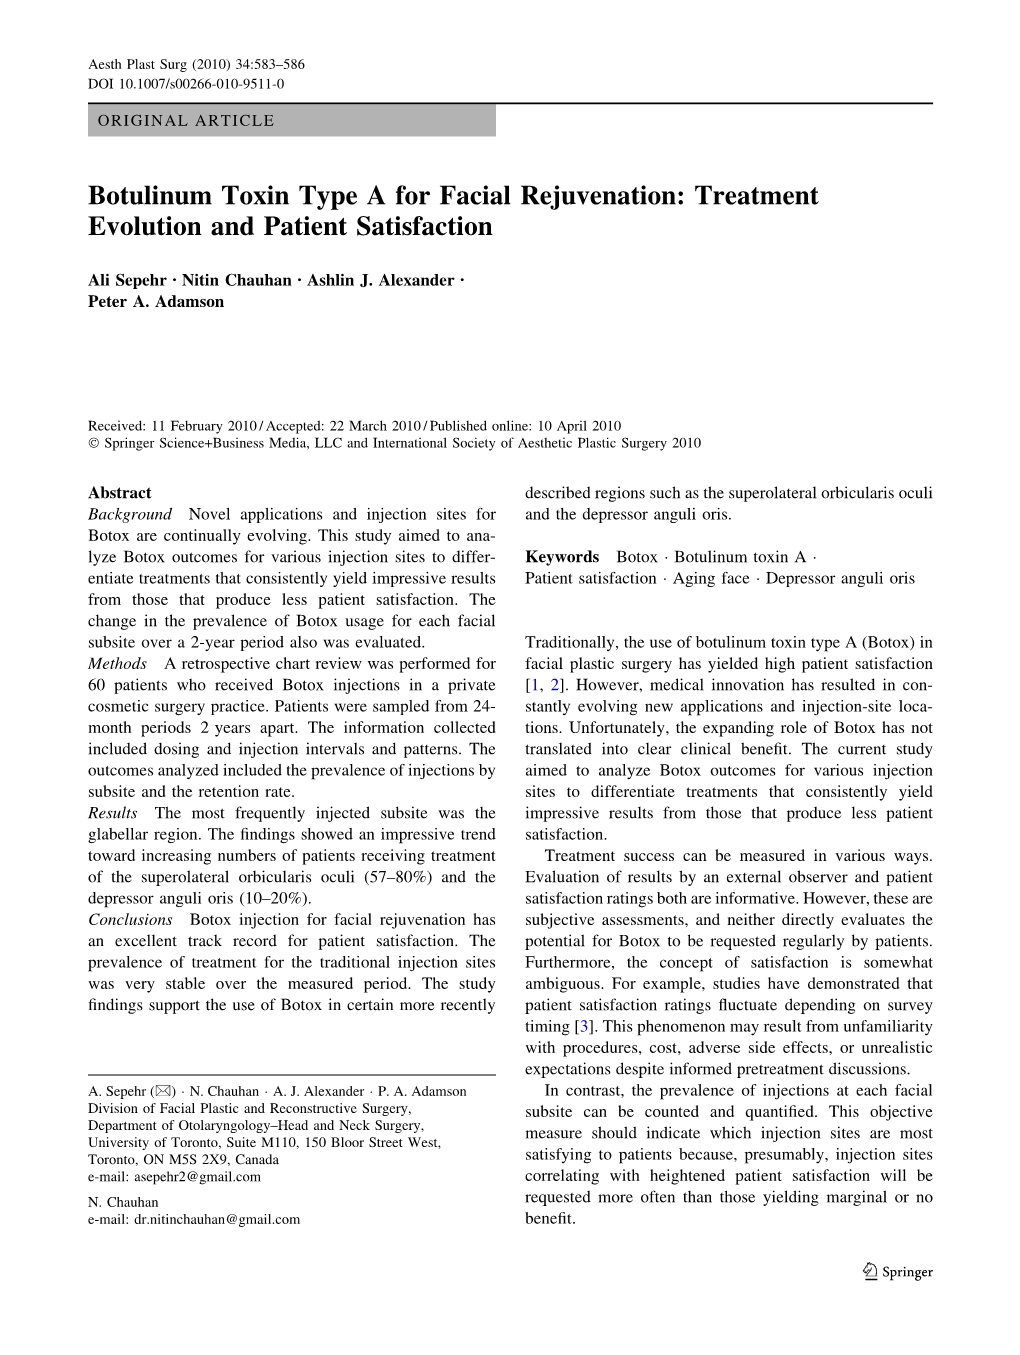 Botulinum Toxin Type a for Facial Rejuvenation: Treatment Evolution and Patient Satisfaction